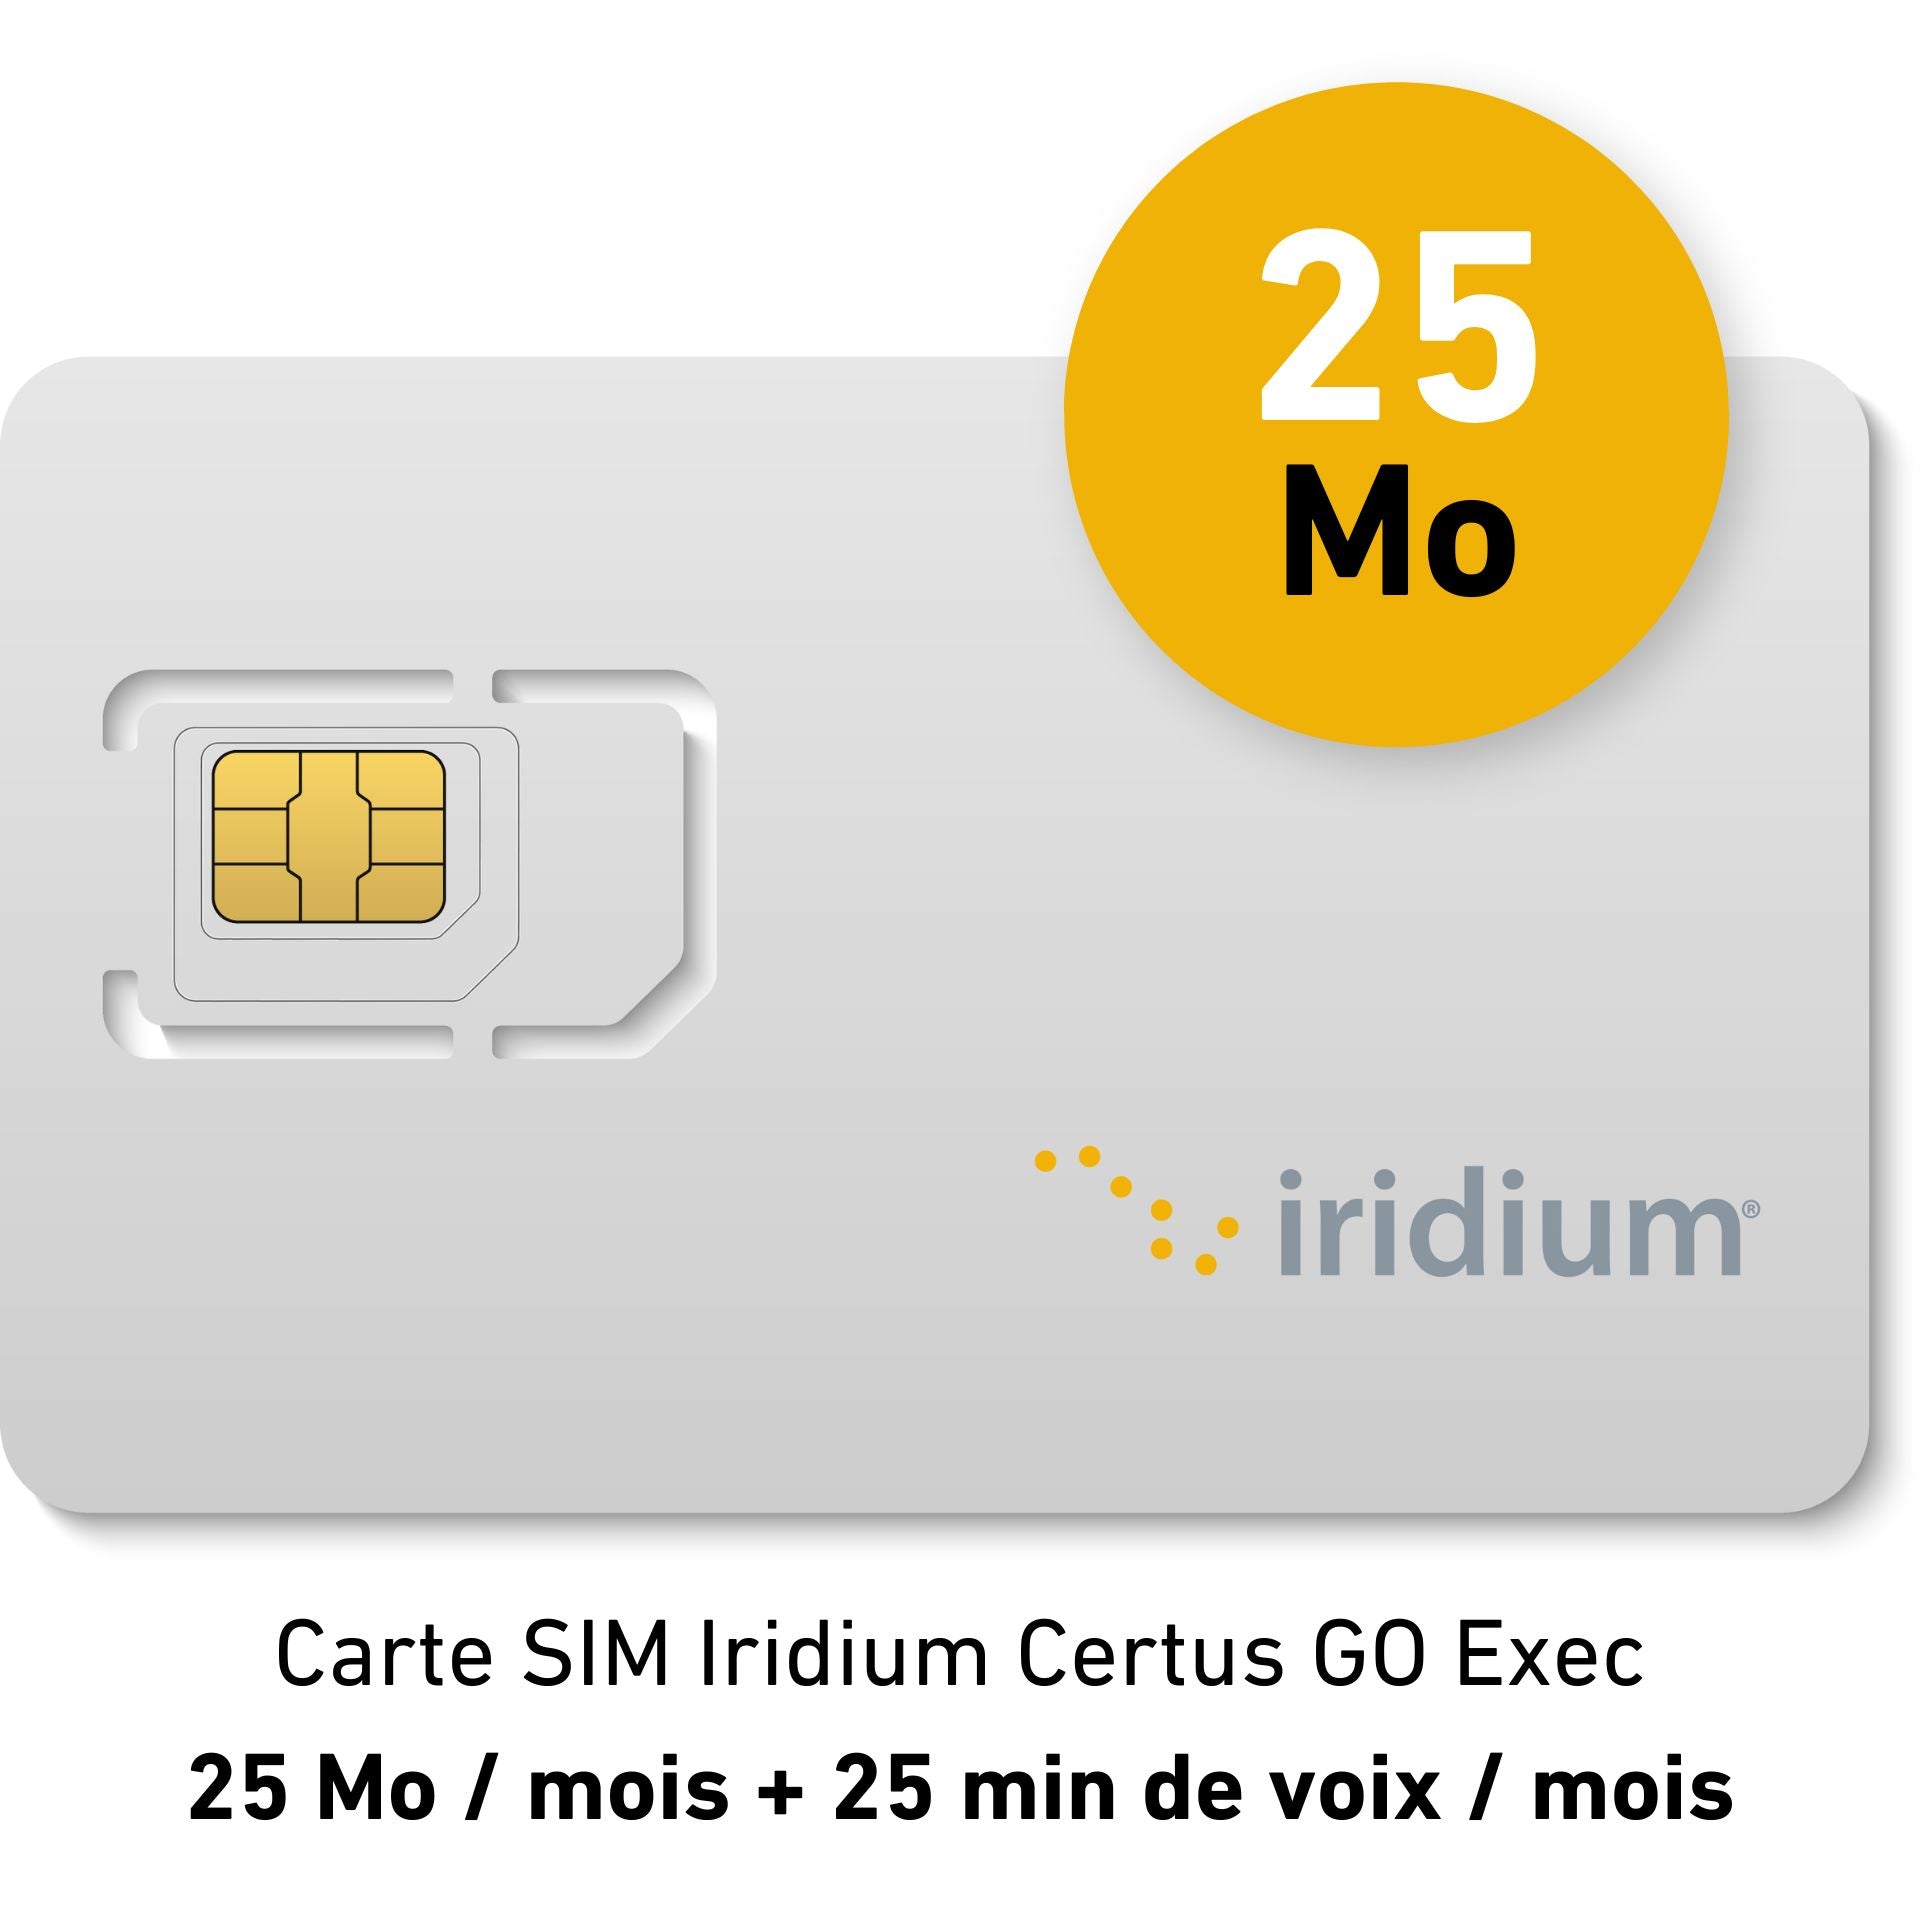 Iridium Certus GO Exec Monthly Pleasure Subscription - 25MB/month + 25 min voice/month